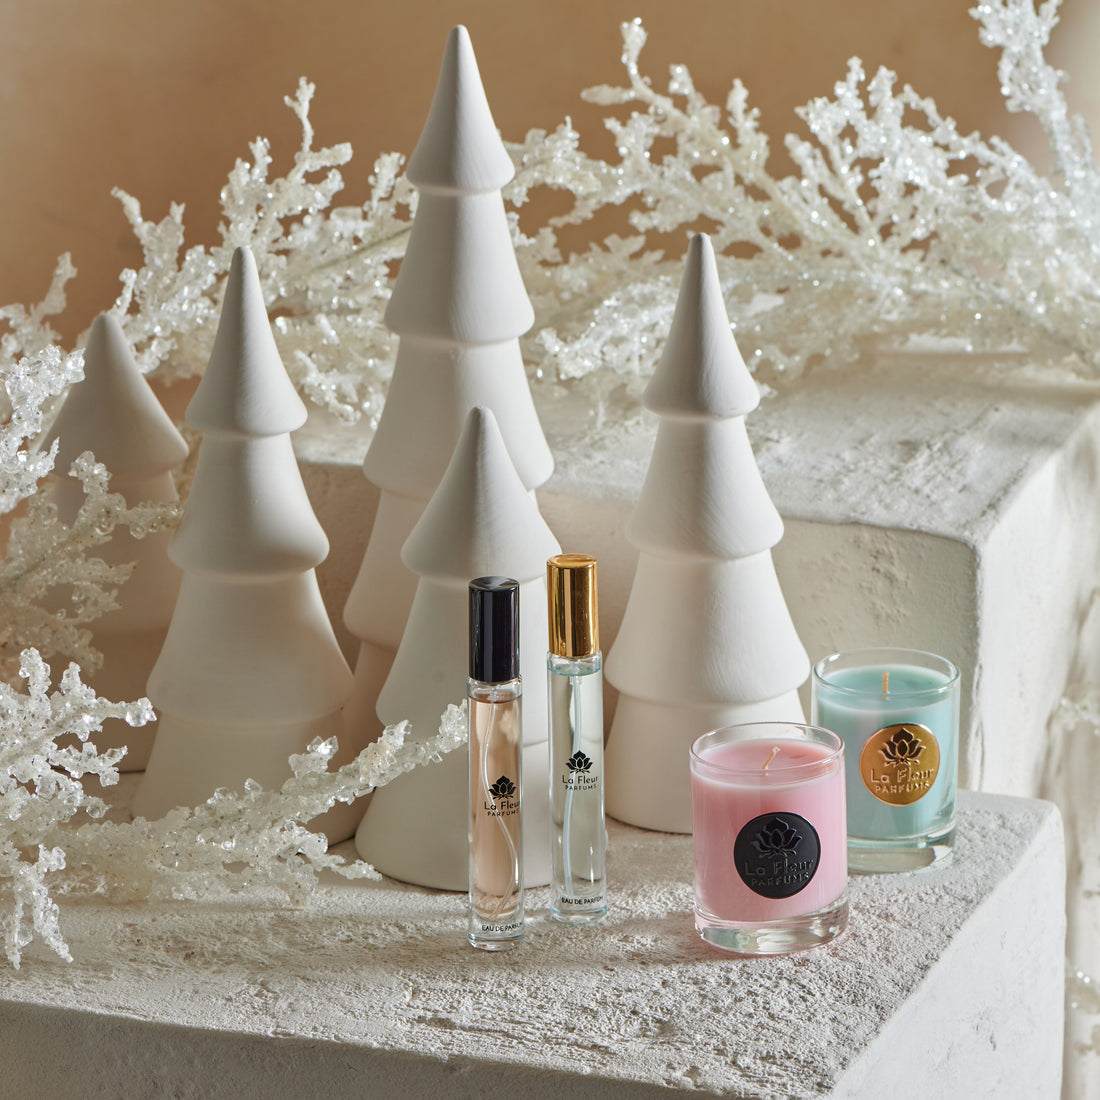 Fragrance + Candle Gift Set by La Fleur Lifetime Flowers